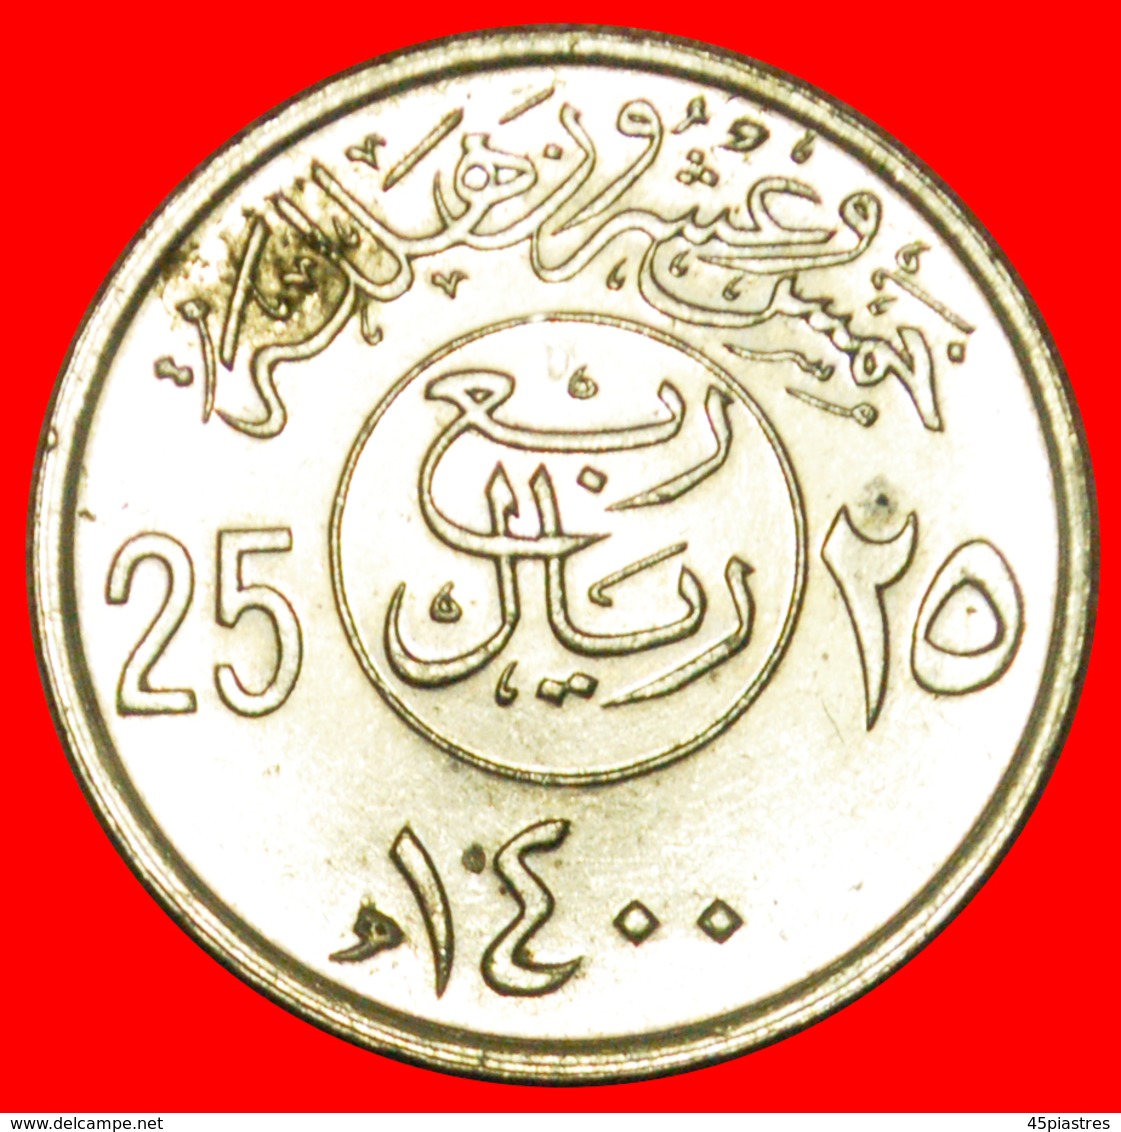 # DAGGERS AND PALMTREE: SAUDI ARABIA ★ 25 HALALA / 1/4  RIYAL 1400 (1980) MINT LUSTER! LOW START ★ NO RESERVE! - Saudi-Arabien